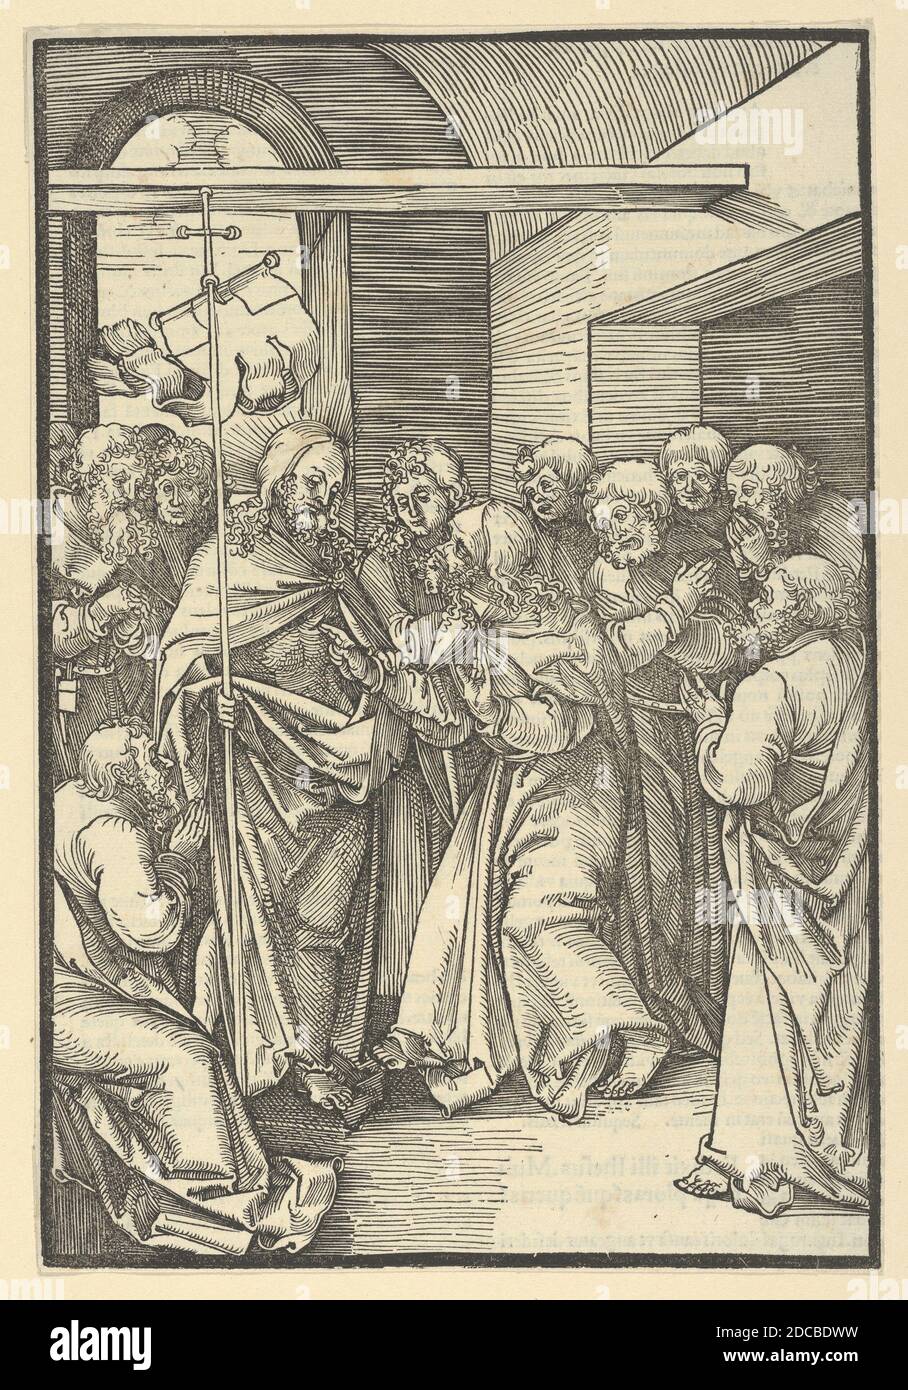 The Incredulity of Thomas, from Speculum passionis domini nostri Ihesu Christi, 1507. Stock Photo